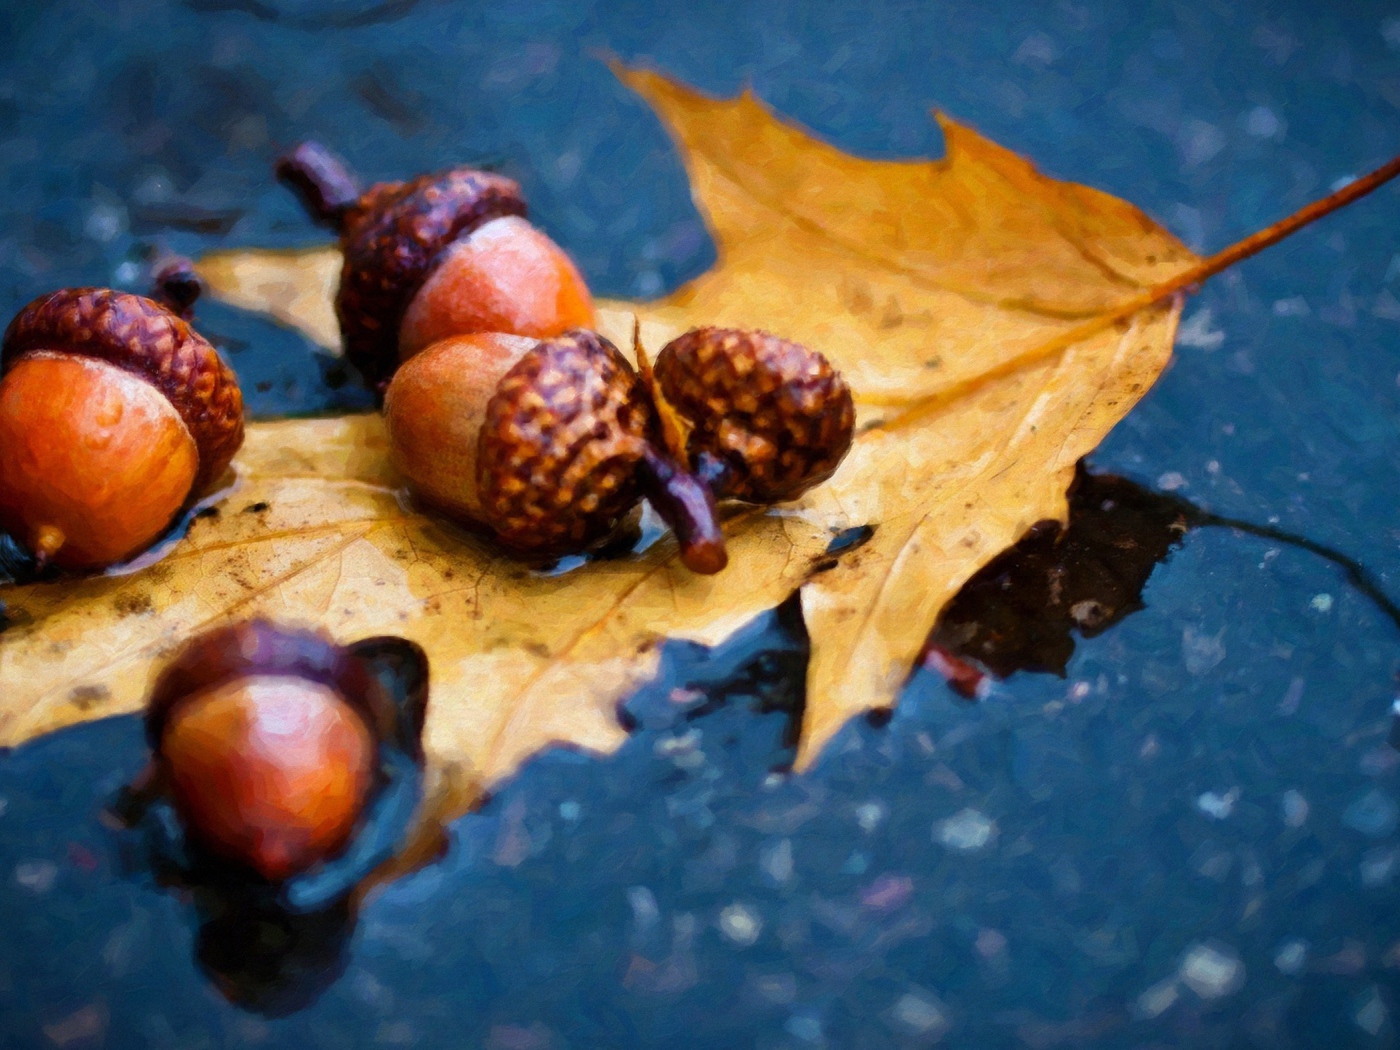 Желуди и дубовый лист под осенним дождем